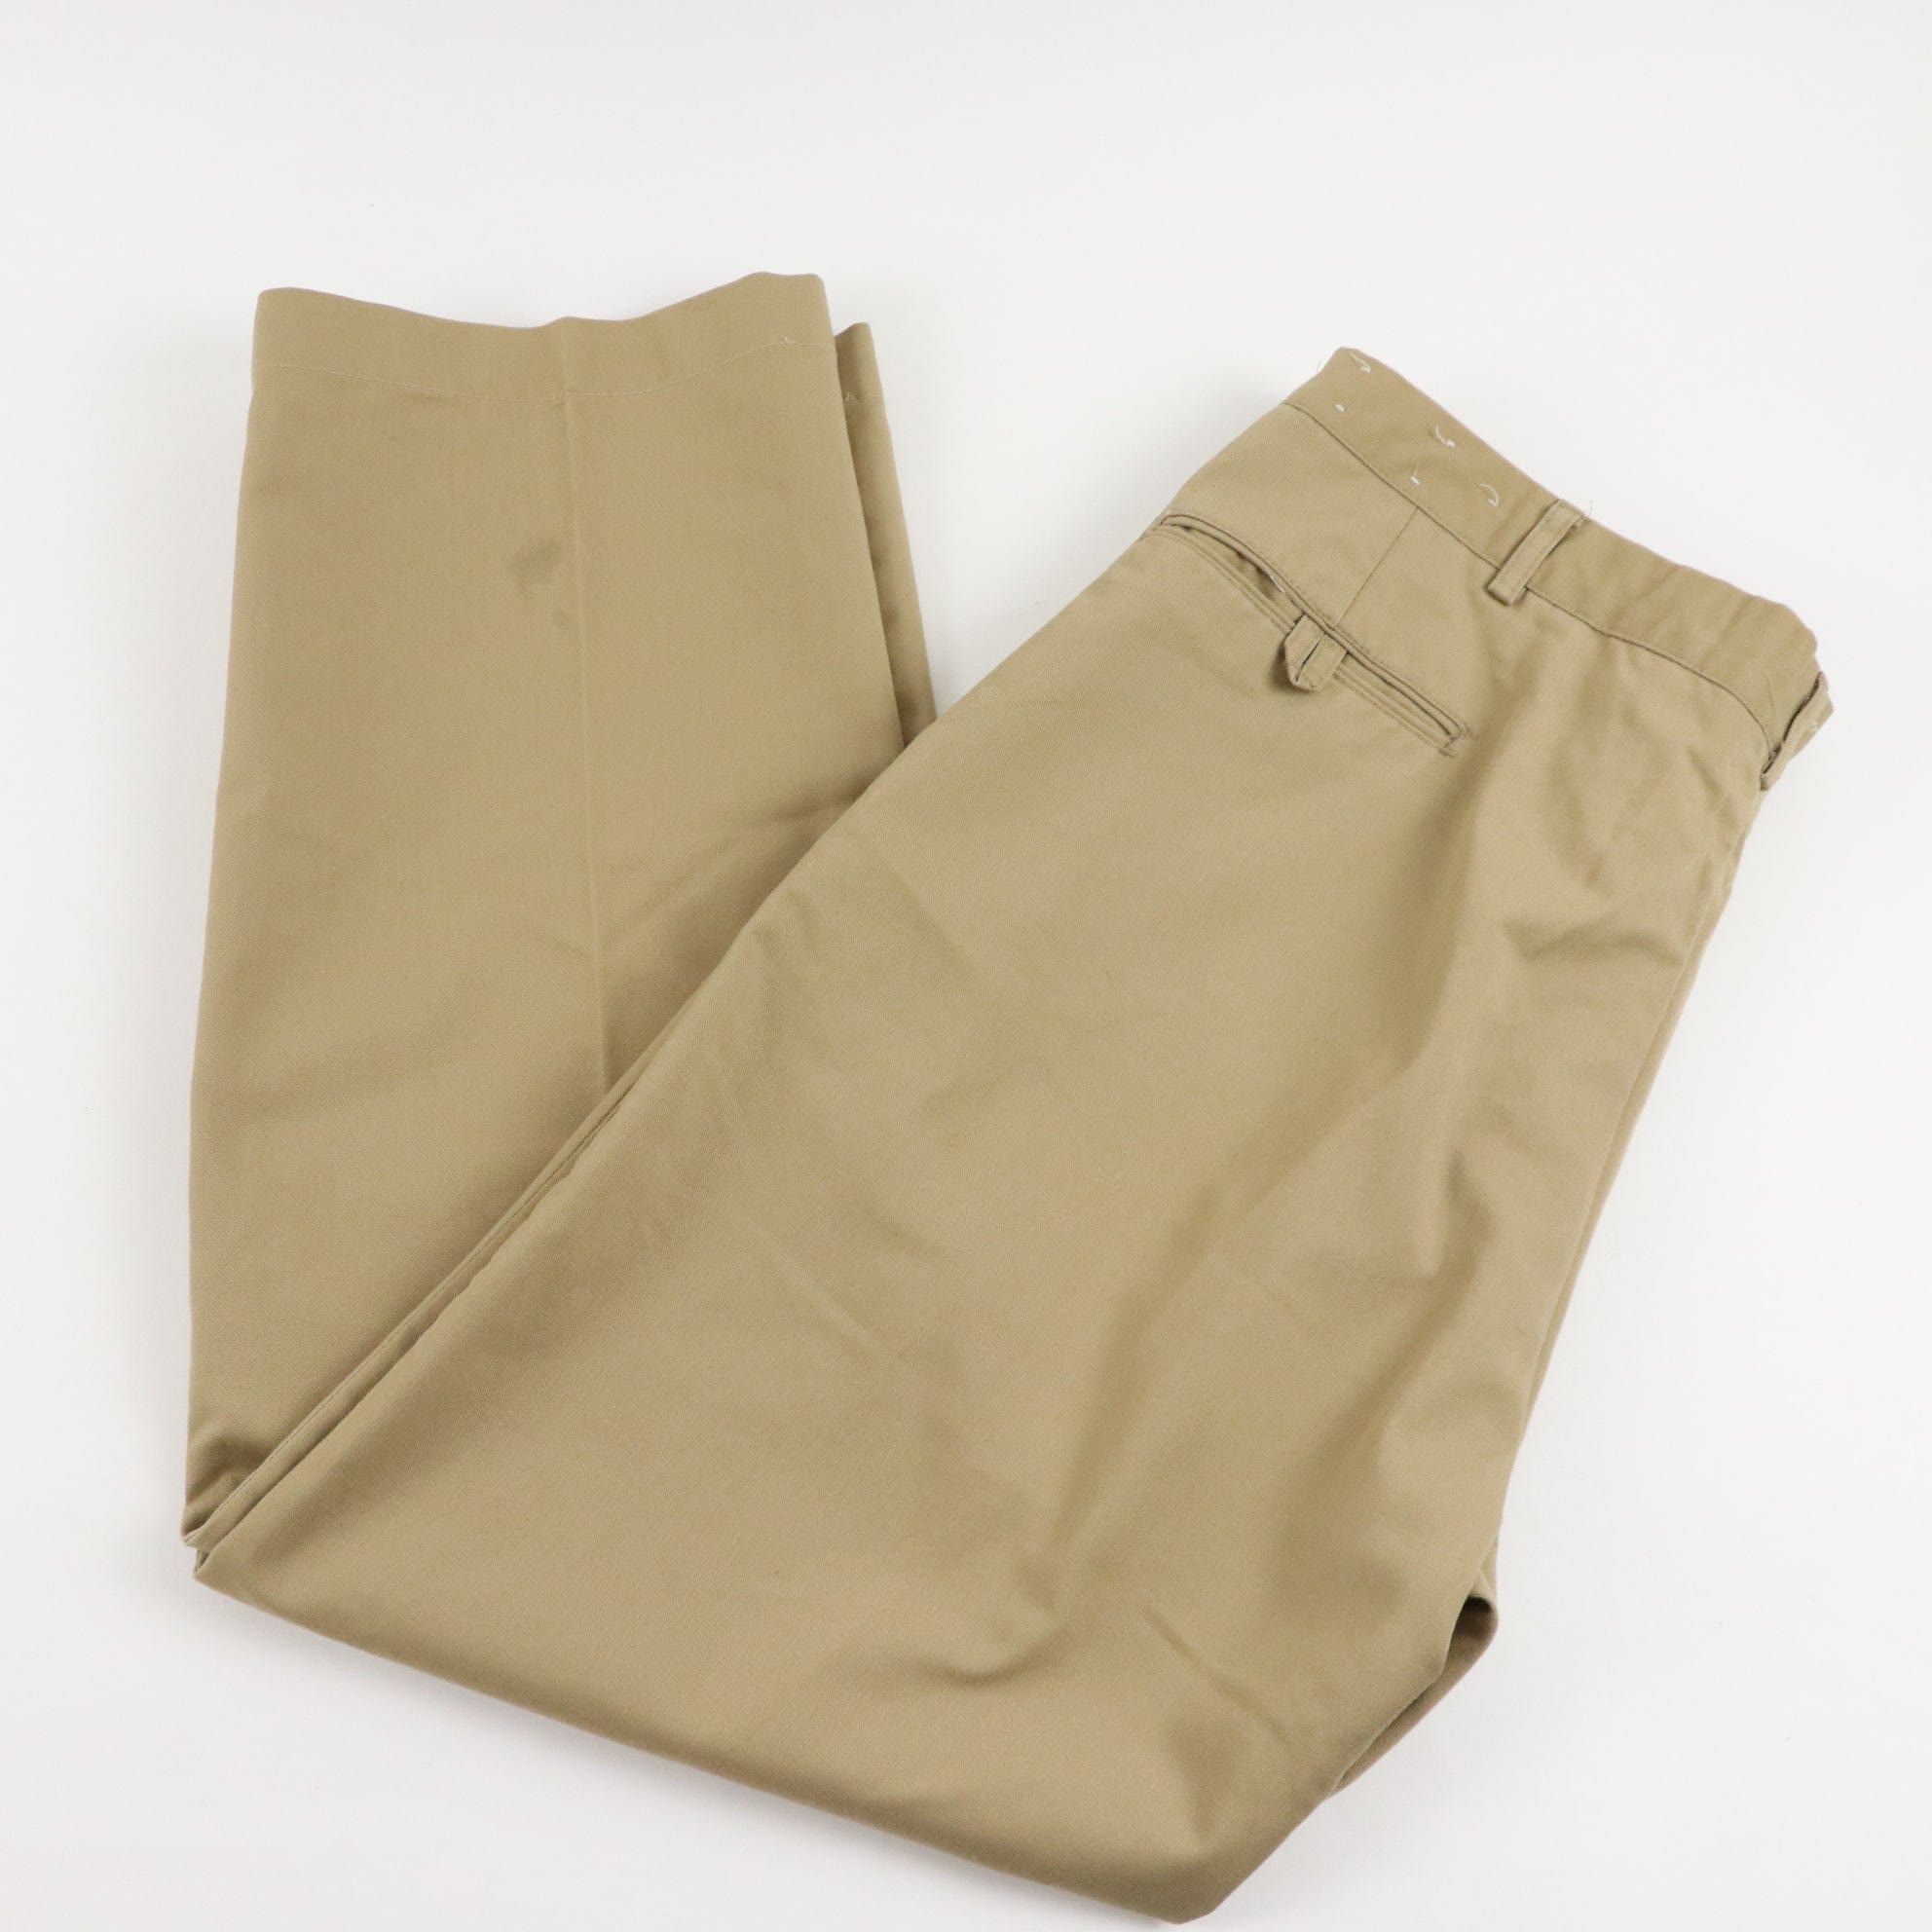 Vintage Vintage US Navy Creighton Uniform Pants Size 36 x 30 Size US 36 / EU 52 - 3 Thumbnail